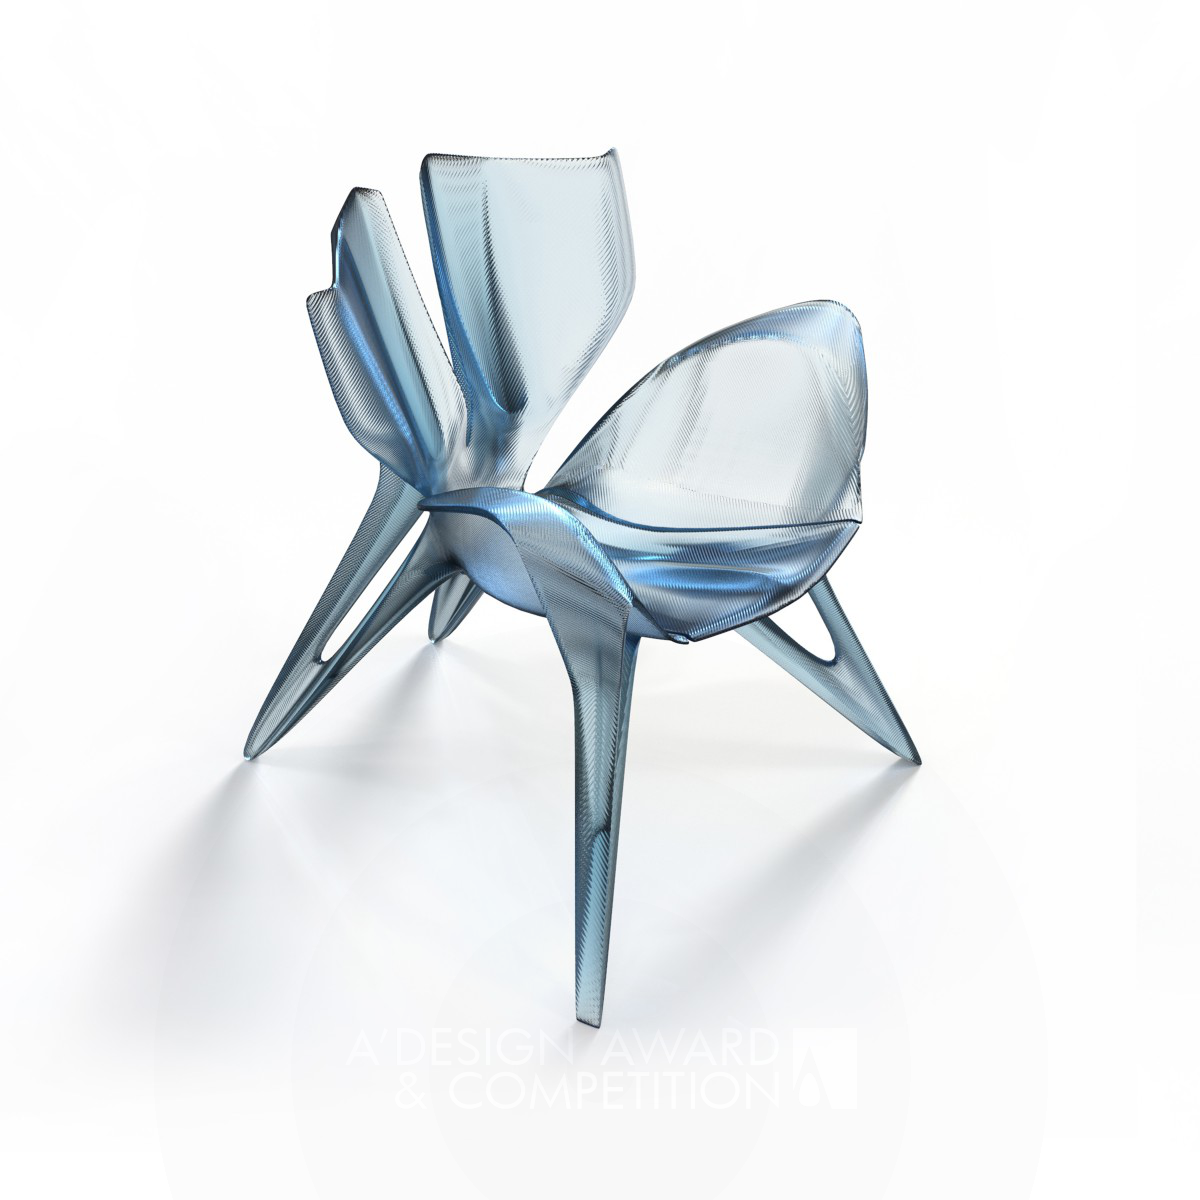 Wings Leisure Chair by Wei Jingye and Wu Yanxia Silver Furniture Design Award Winner 2022 